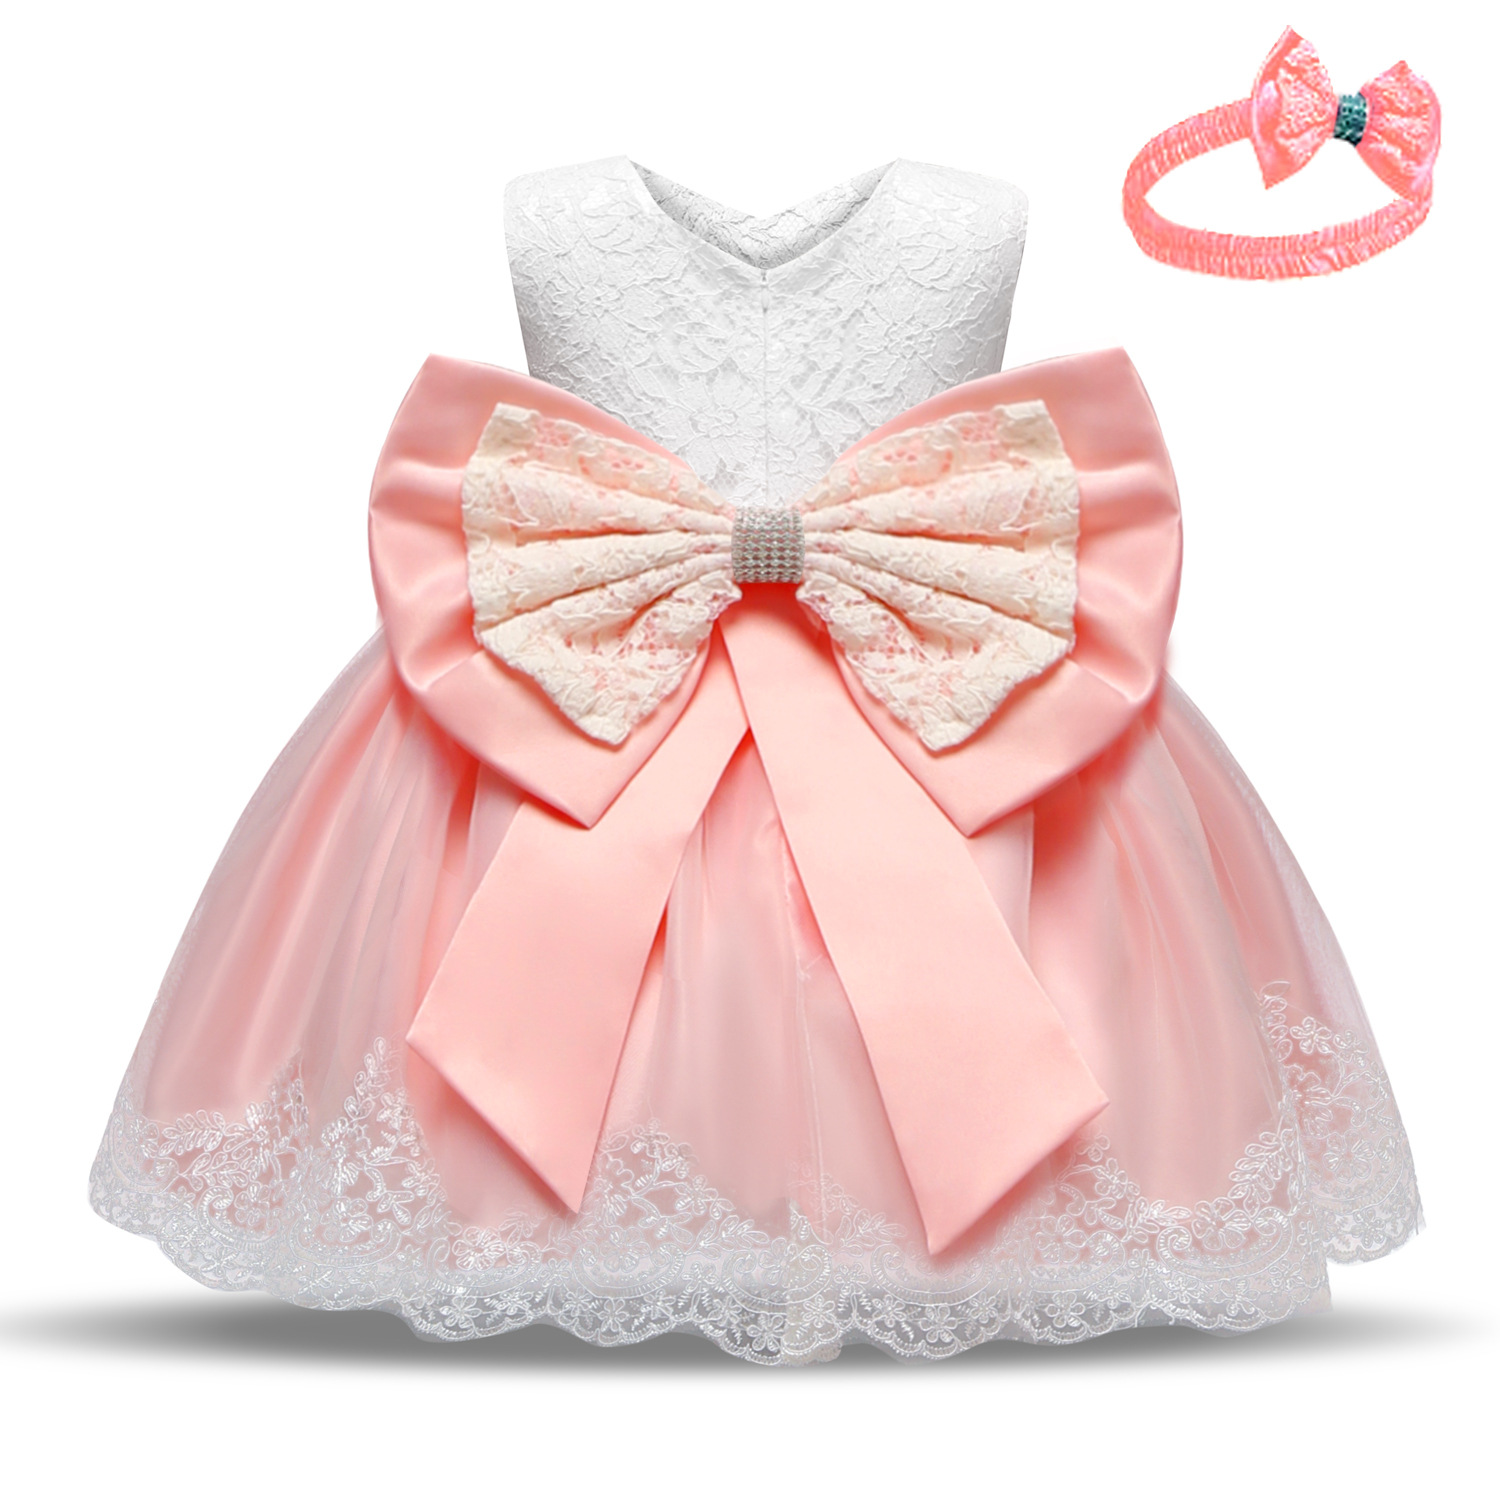 Wish Amazon hot sale baby princess dress...